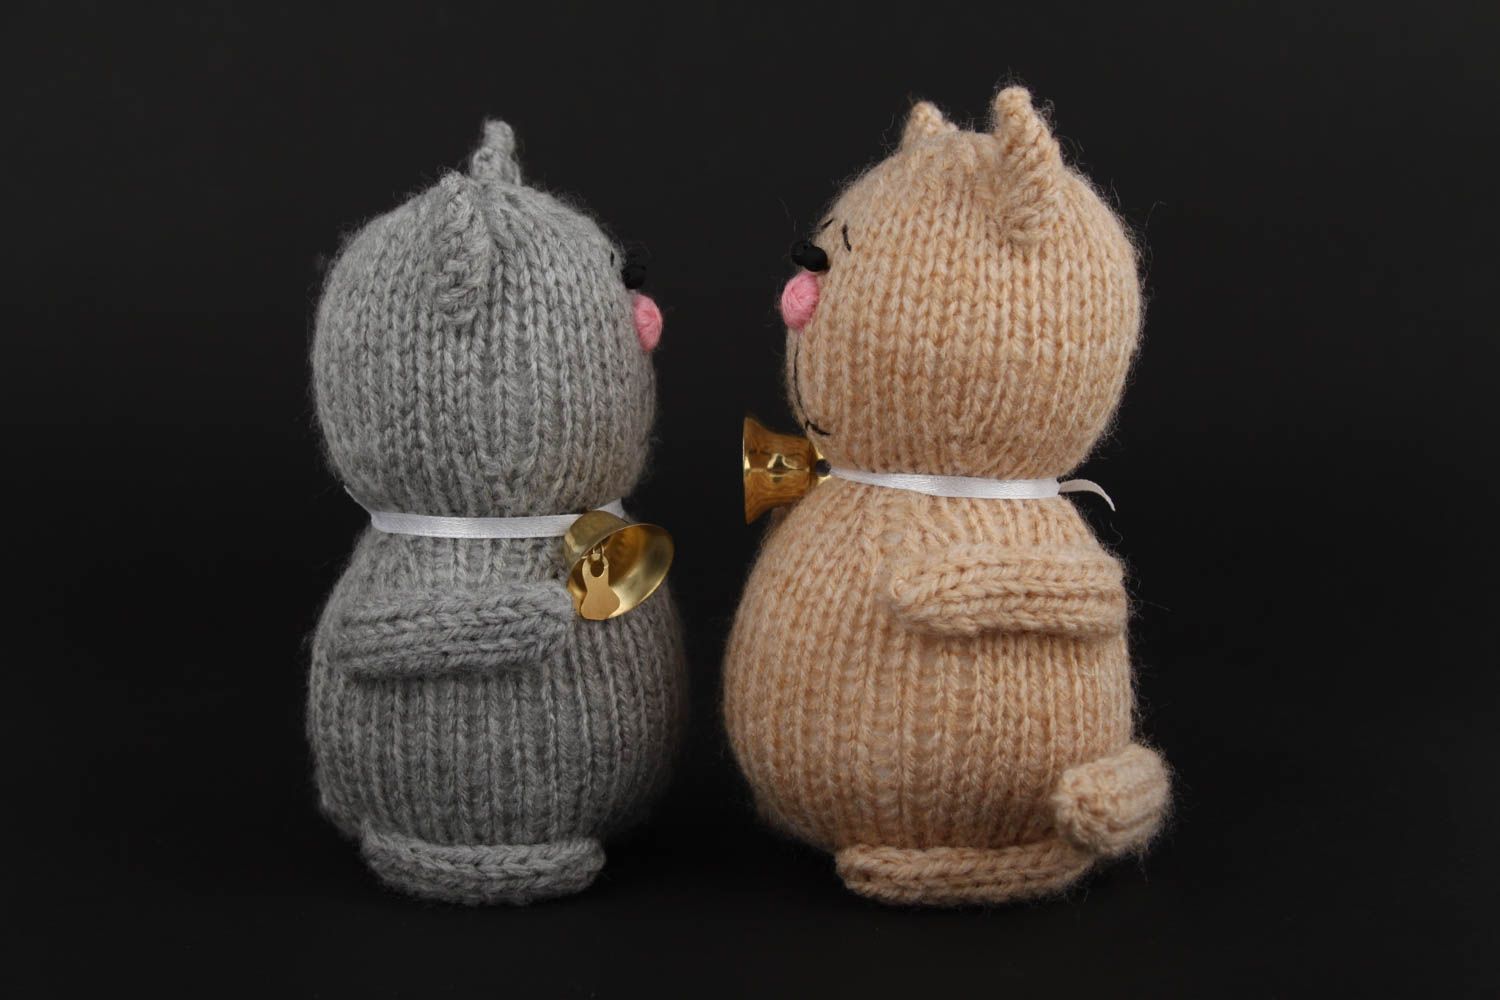 Handmade cute knitted toys 2 beautiful soft toys cats nursery decor ideas photo 5